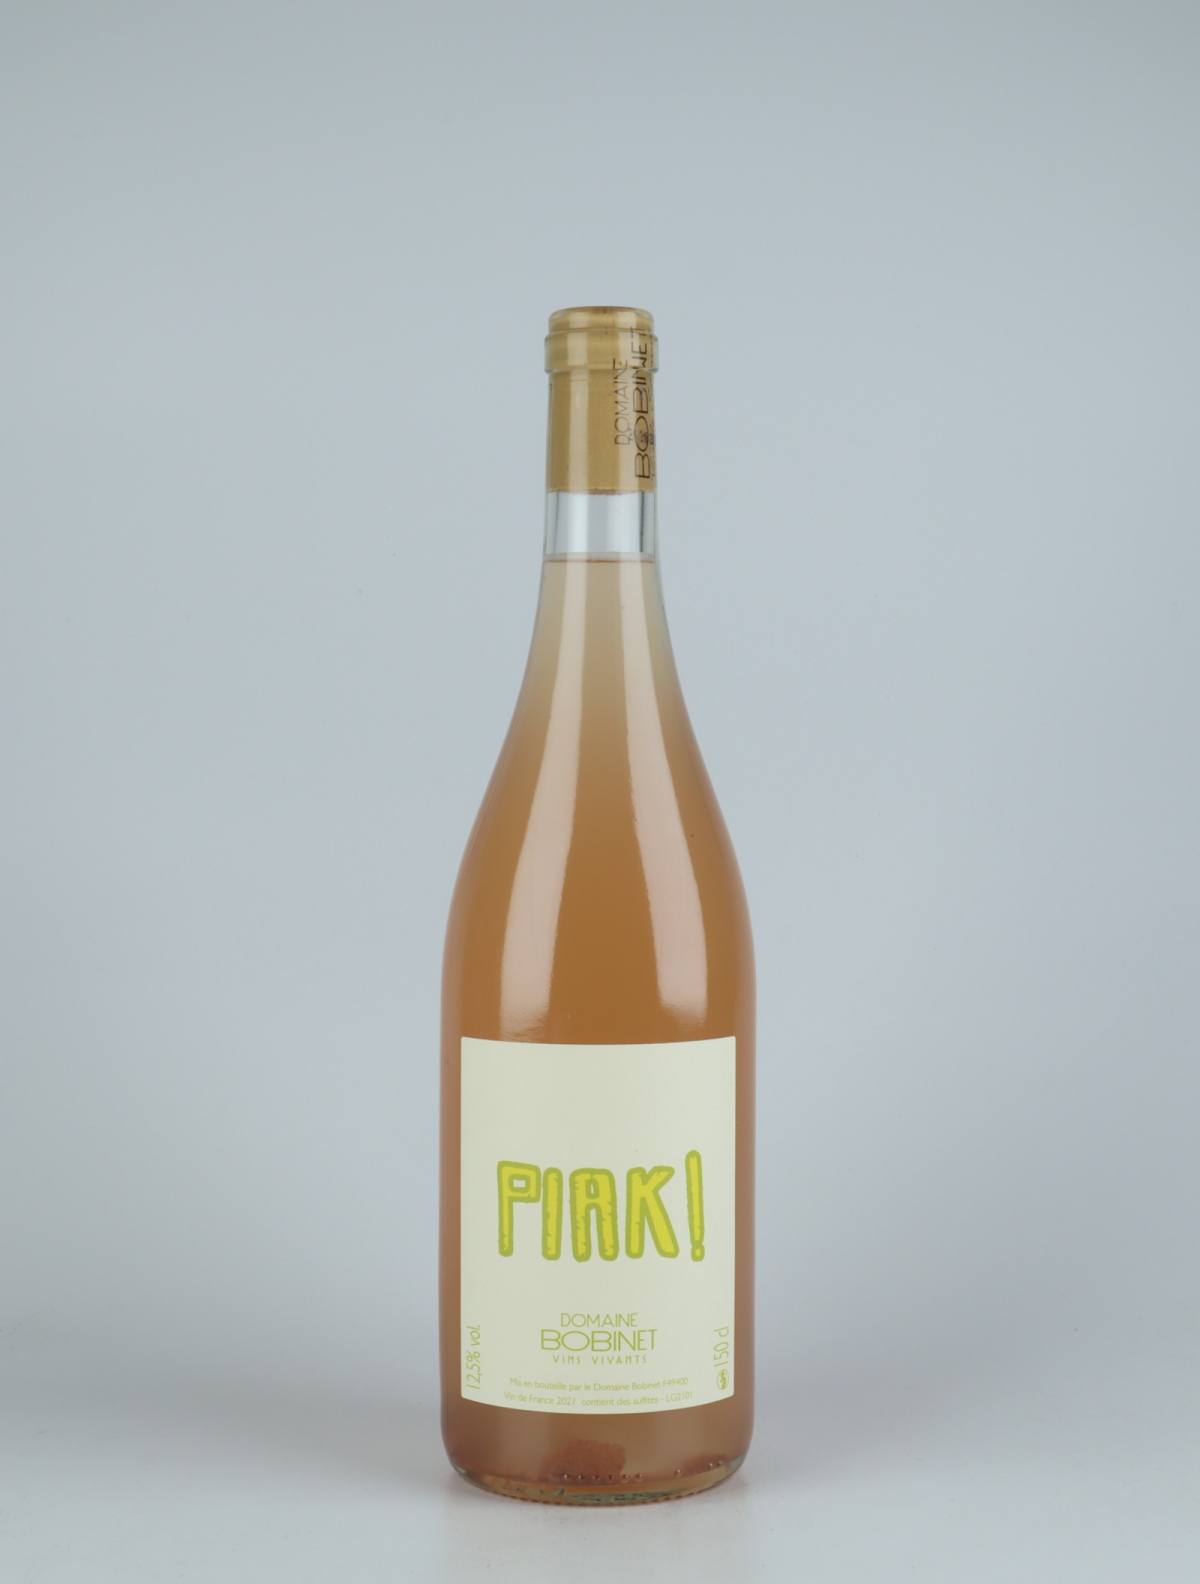 A bottle 2021 PIAK Blanc White wine from Domaine Bobinet, Loire in France